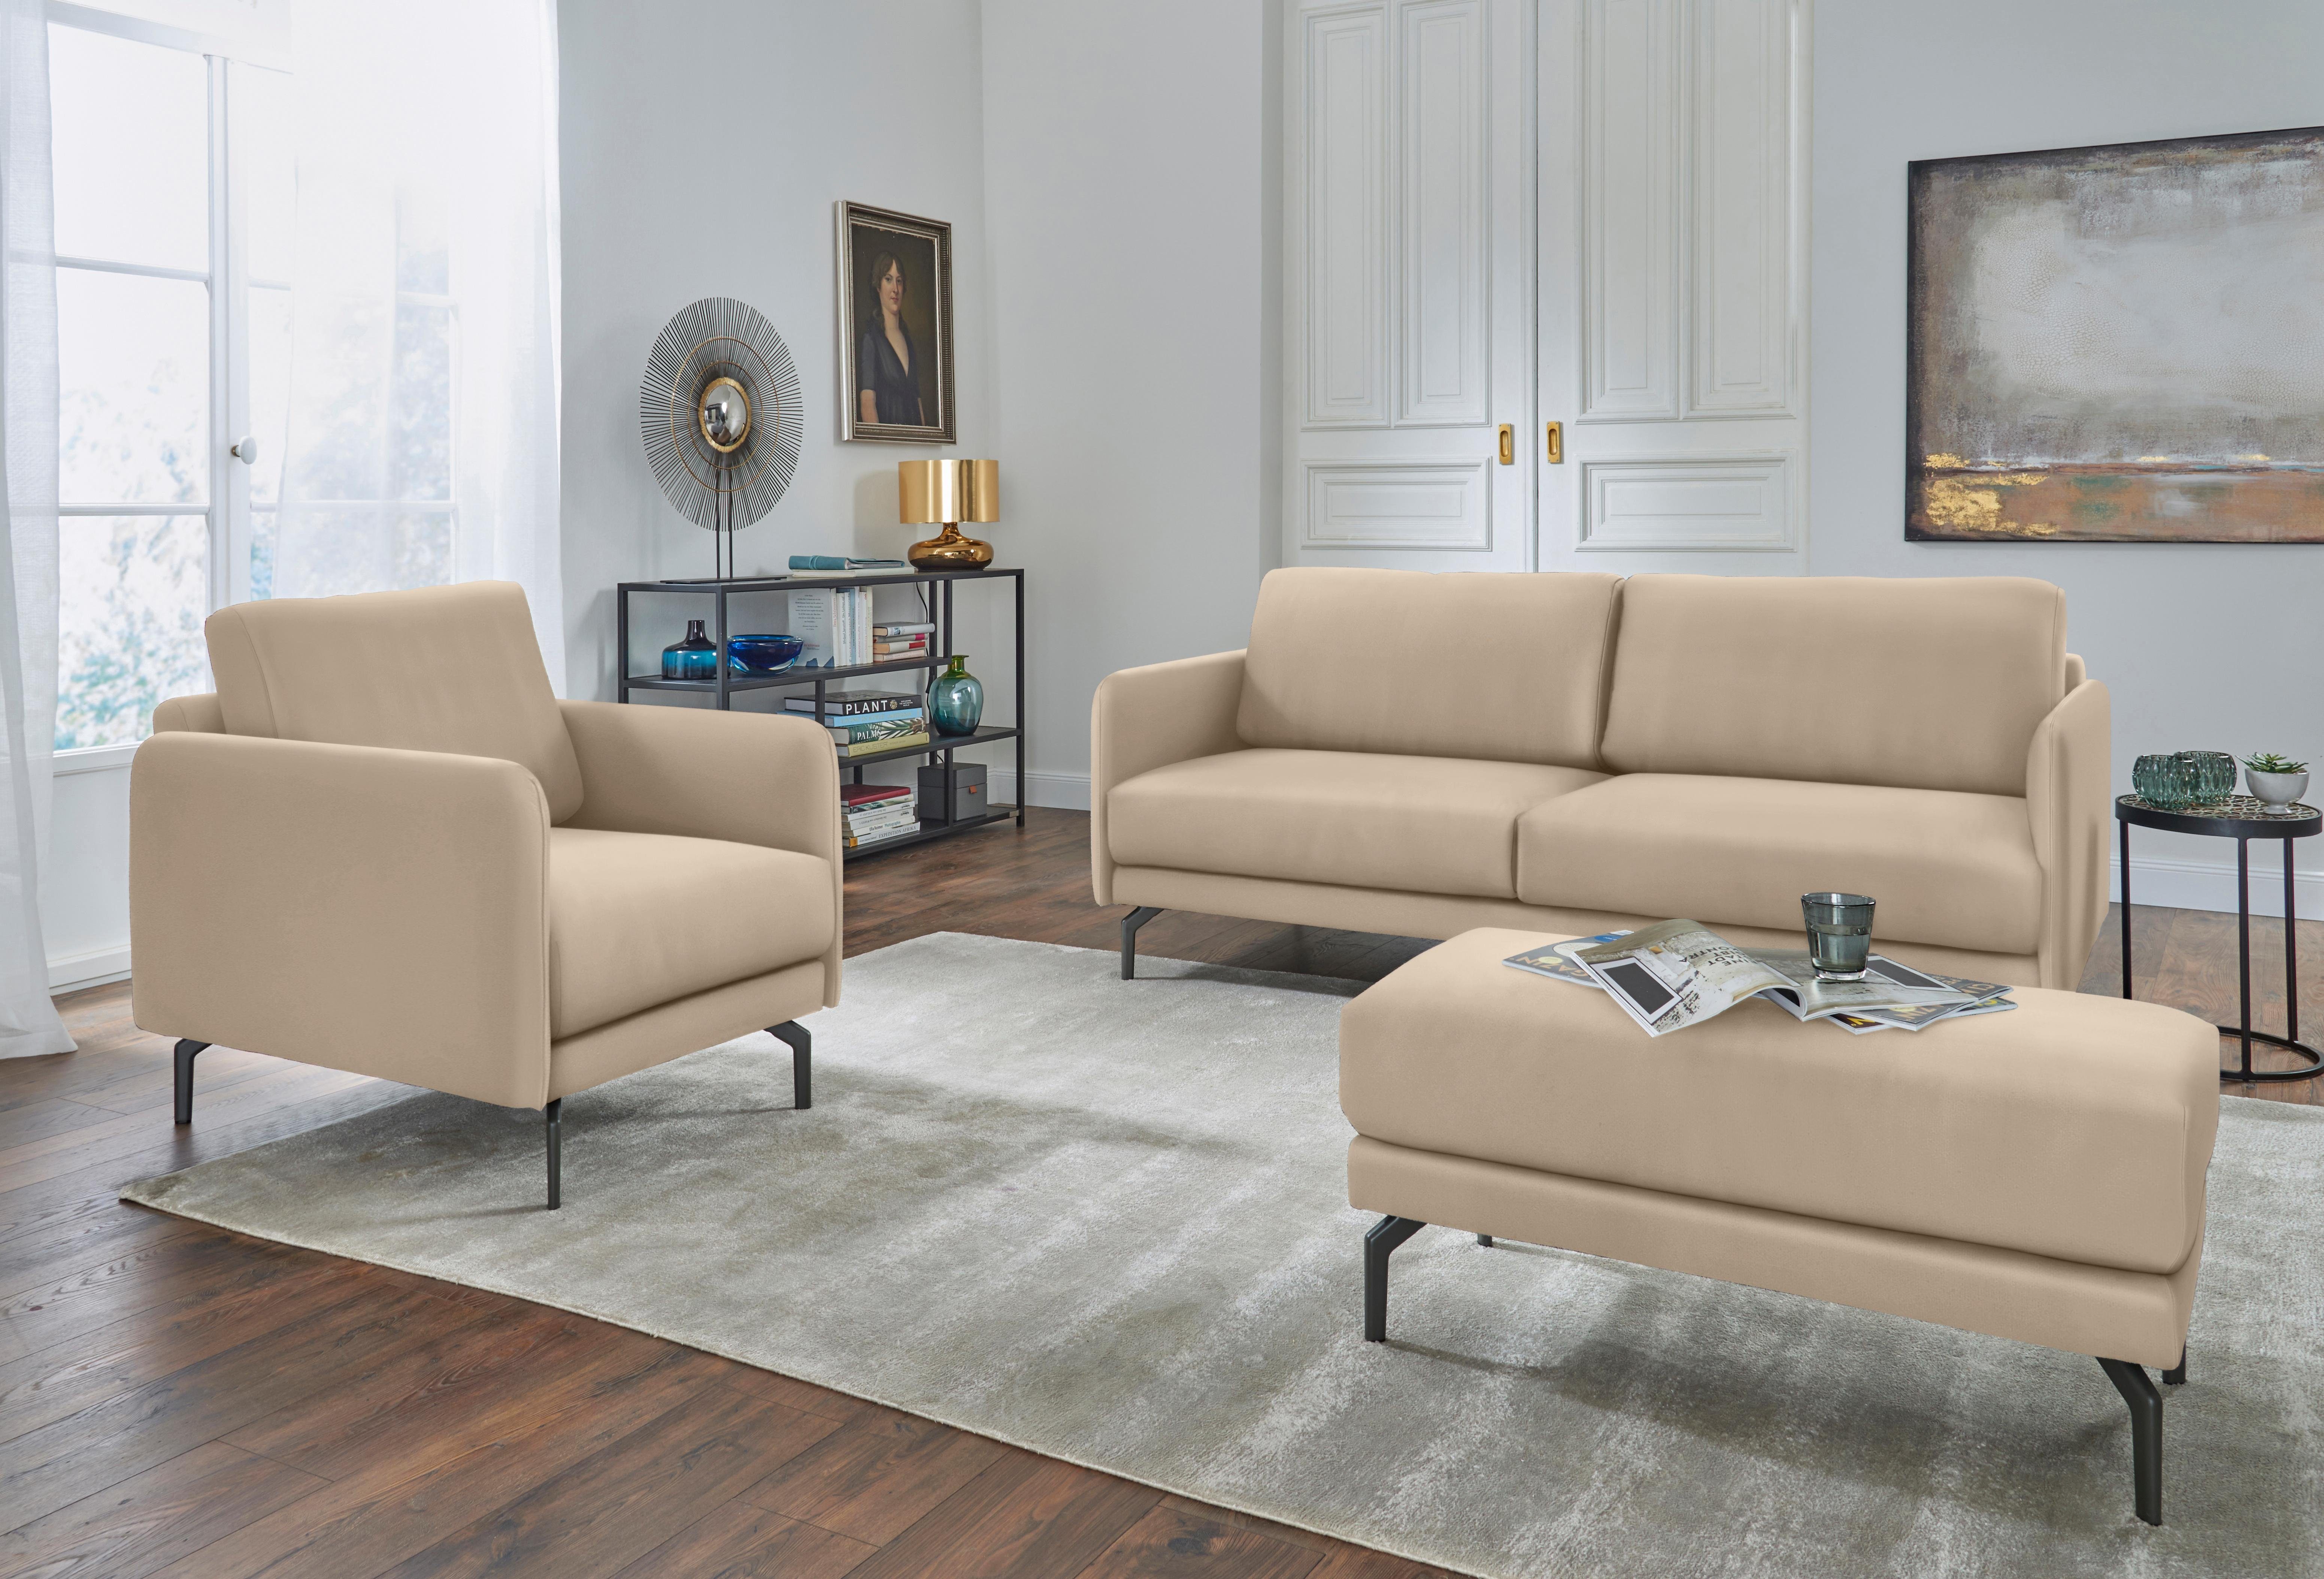 Breite 190 3-Sitzer sofa Armlehne hülsta Umbragrau Alugussfuß schmal, cm, hs.450, sehr